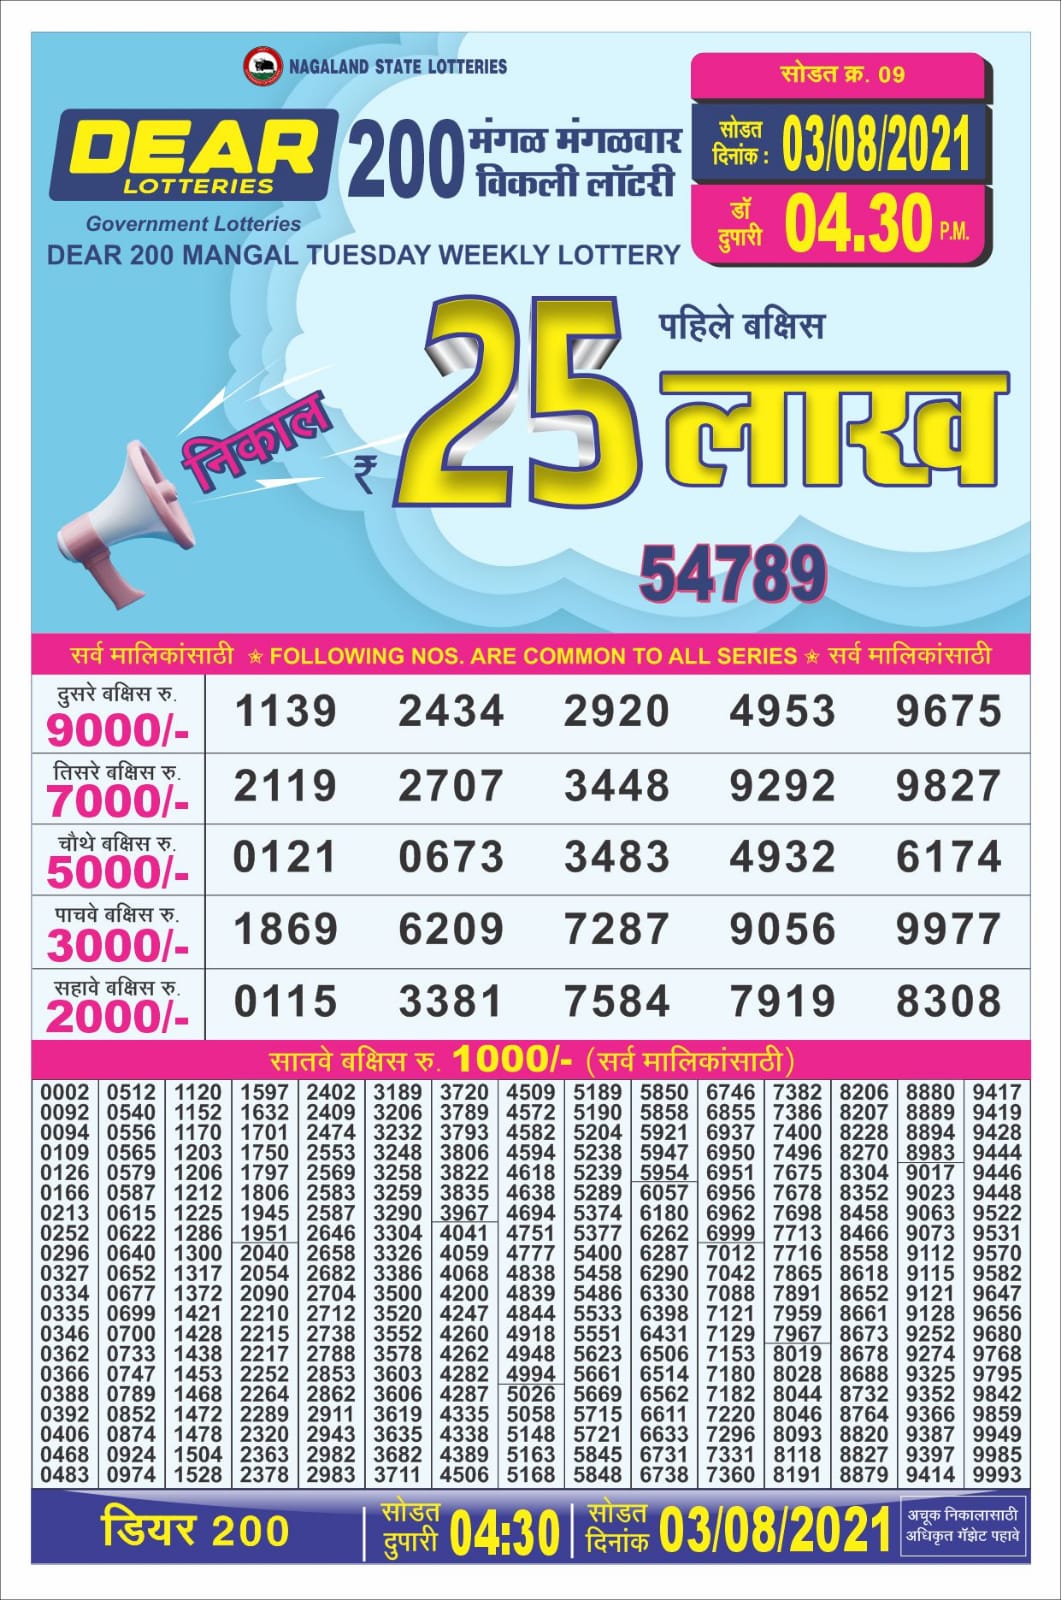 Dear 200 mangal weekly lottery 04-30 pm 03-08-2021